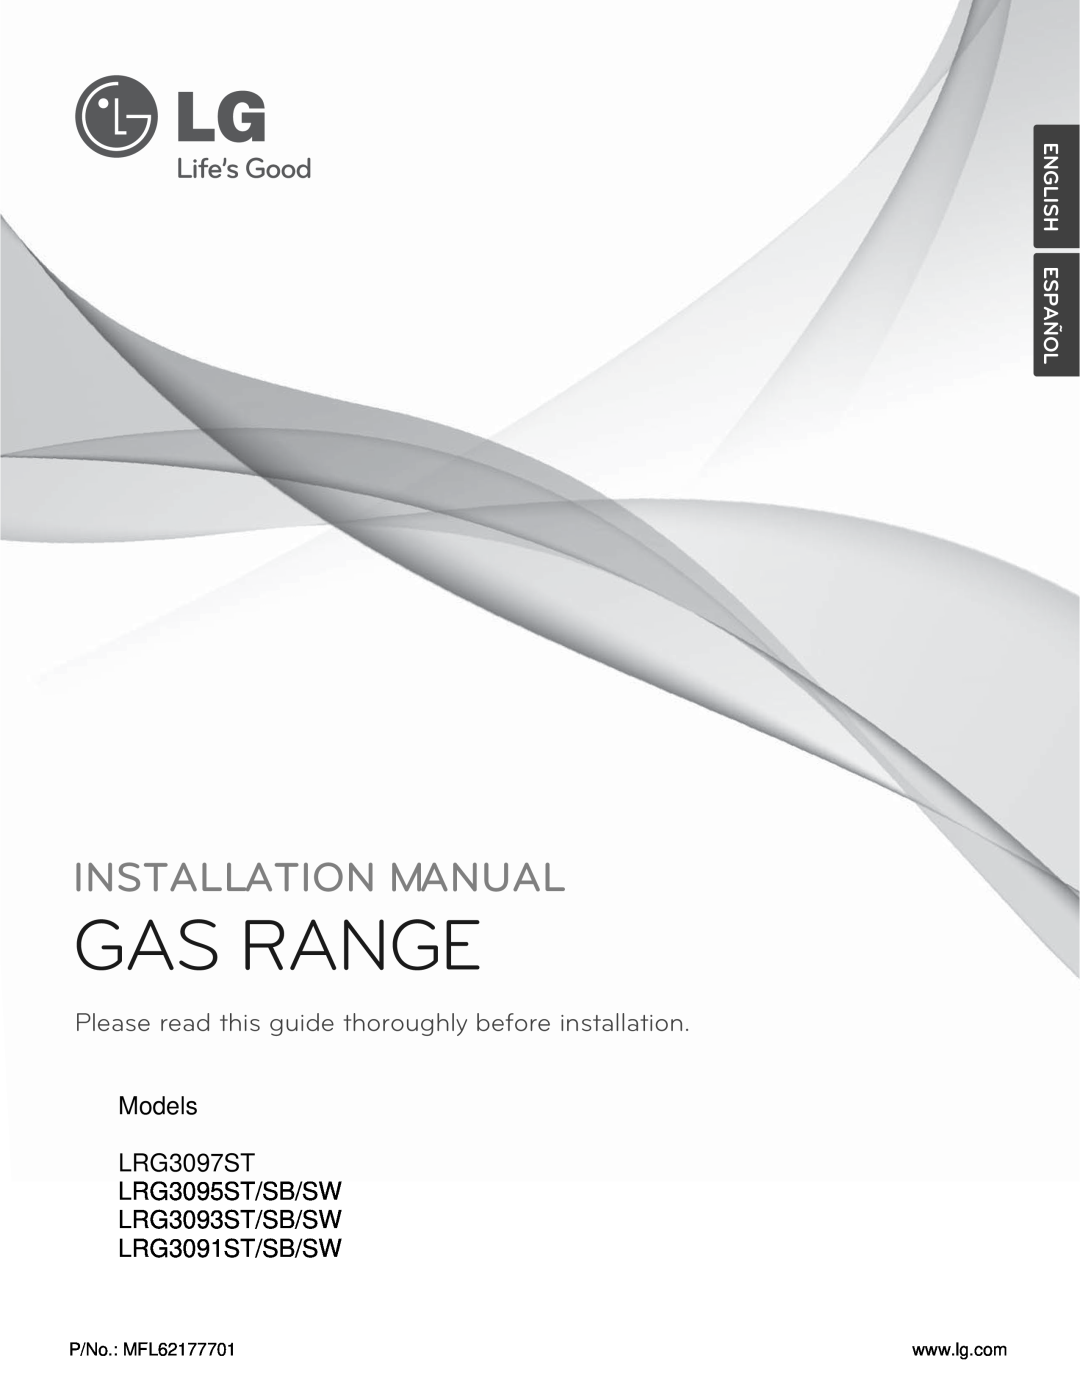 LG Electronics LRG3097ST installation manual English Español, Gas Range, Installation Manual, LRG3091ST/SB/SW 